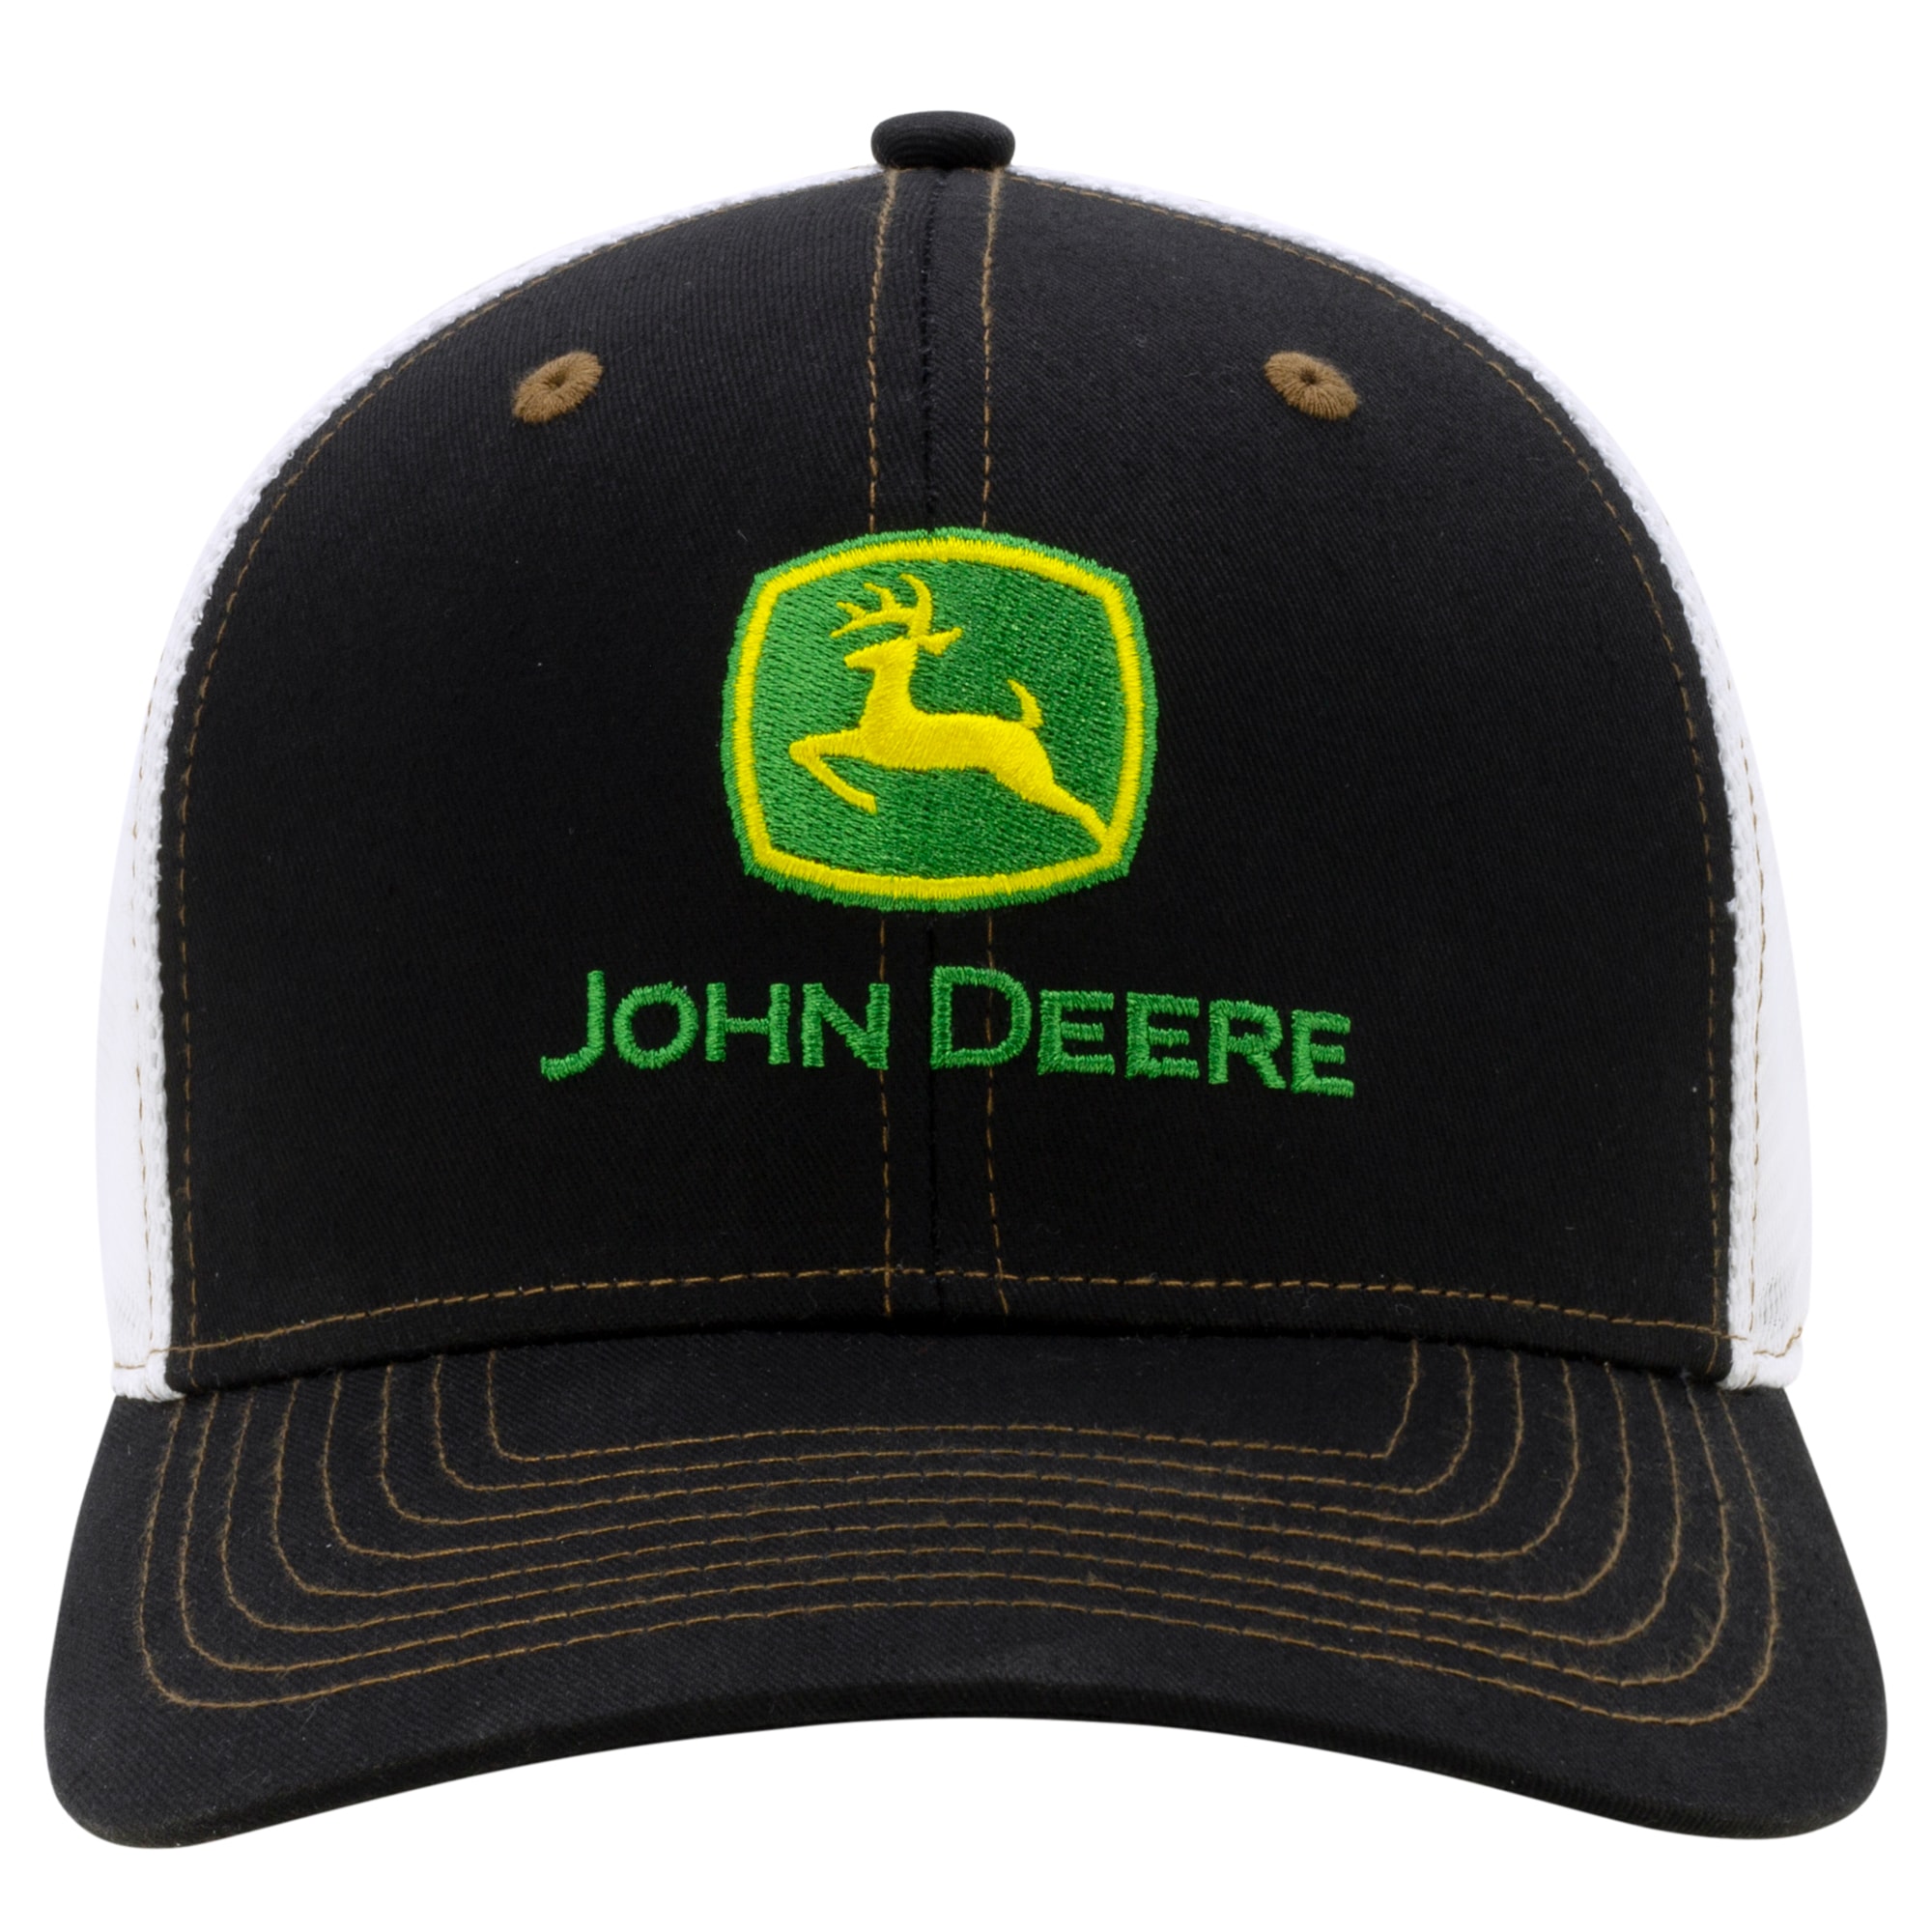 John Deere Men's Black Cotton Baseball Cap at